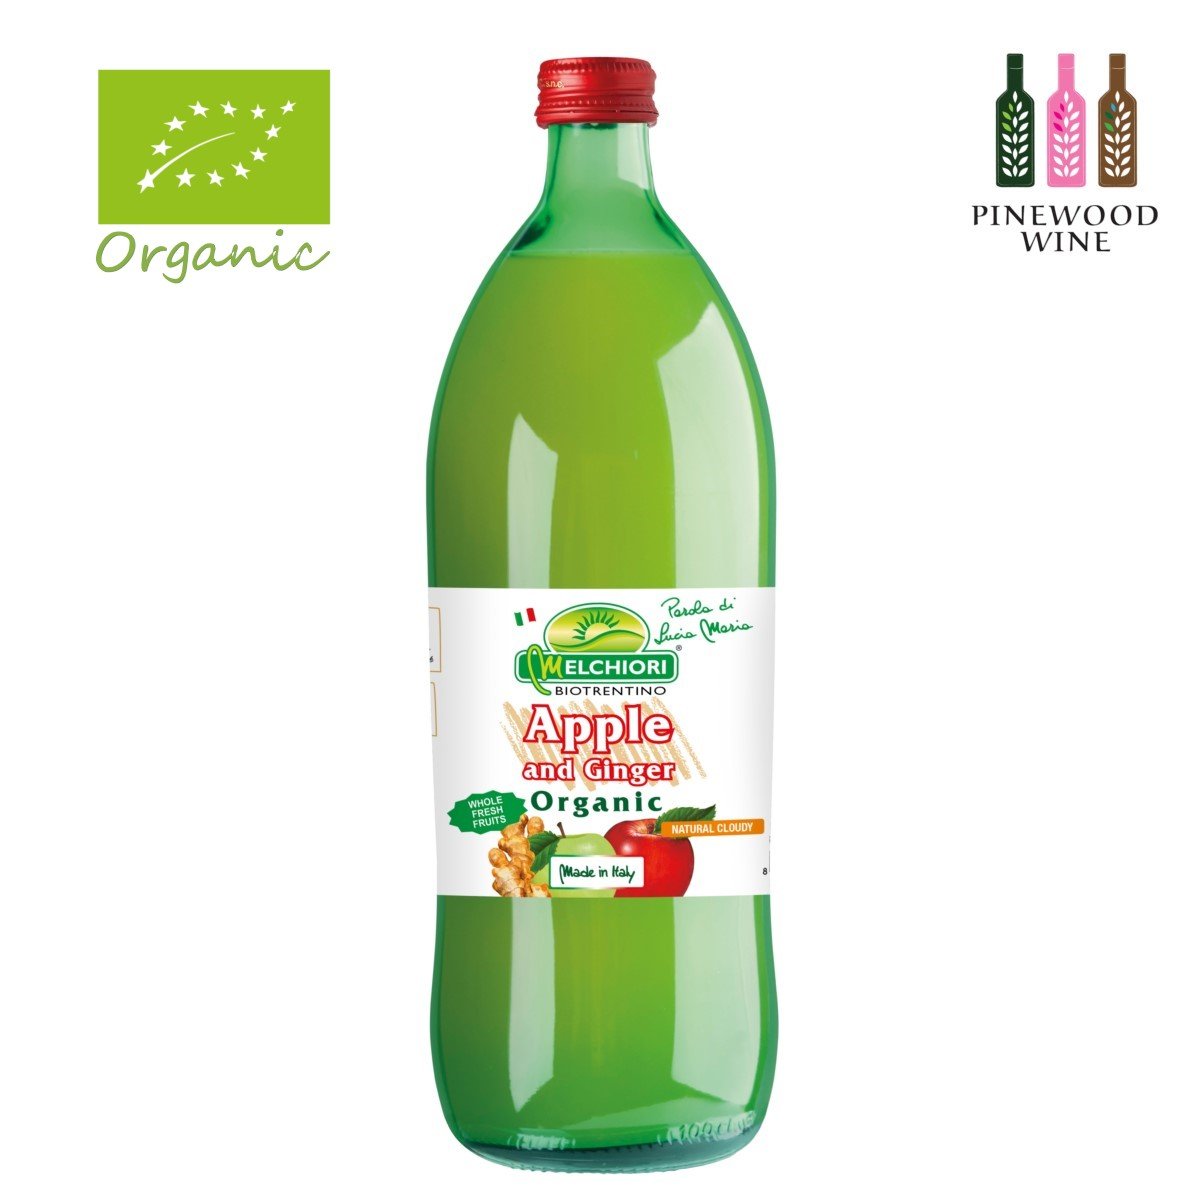 意大利有機冷榨生薑蘋果汁 Organic Apple Juice and Ginger